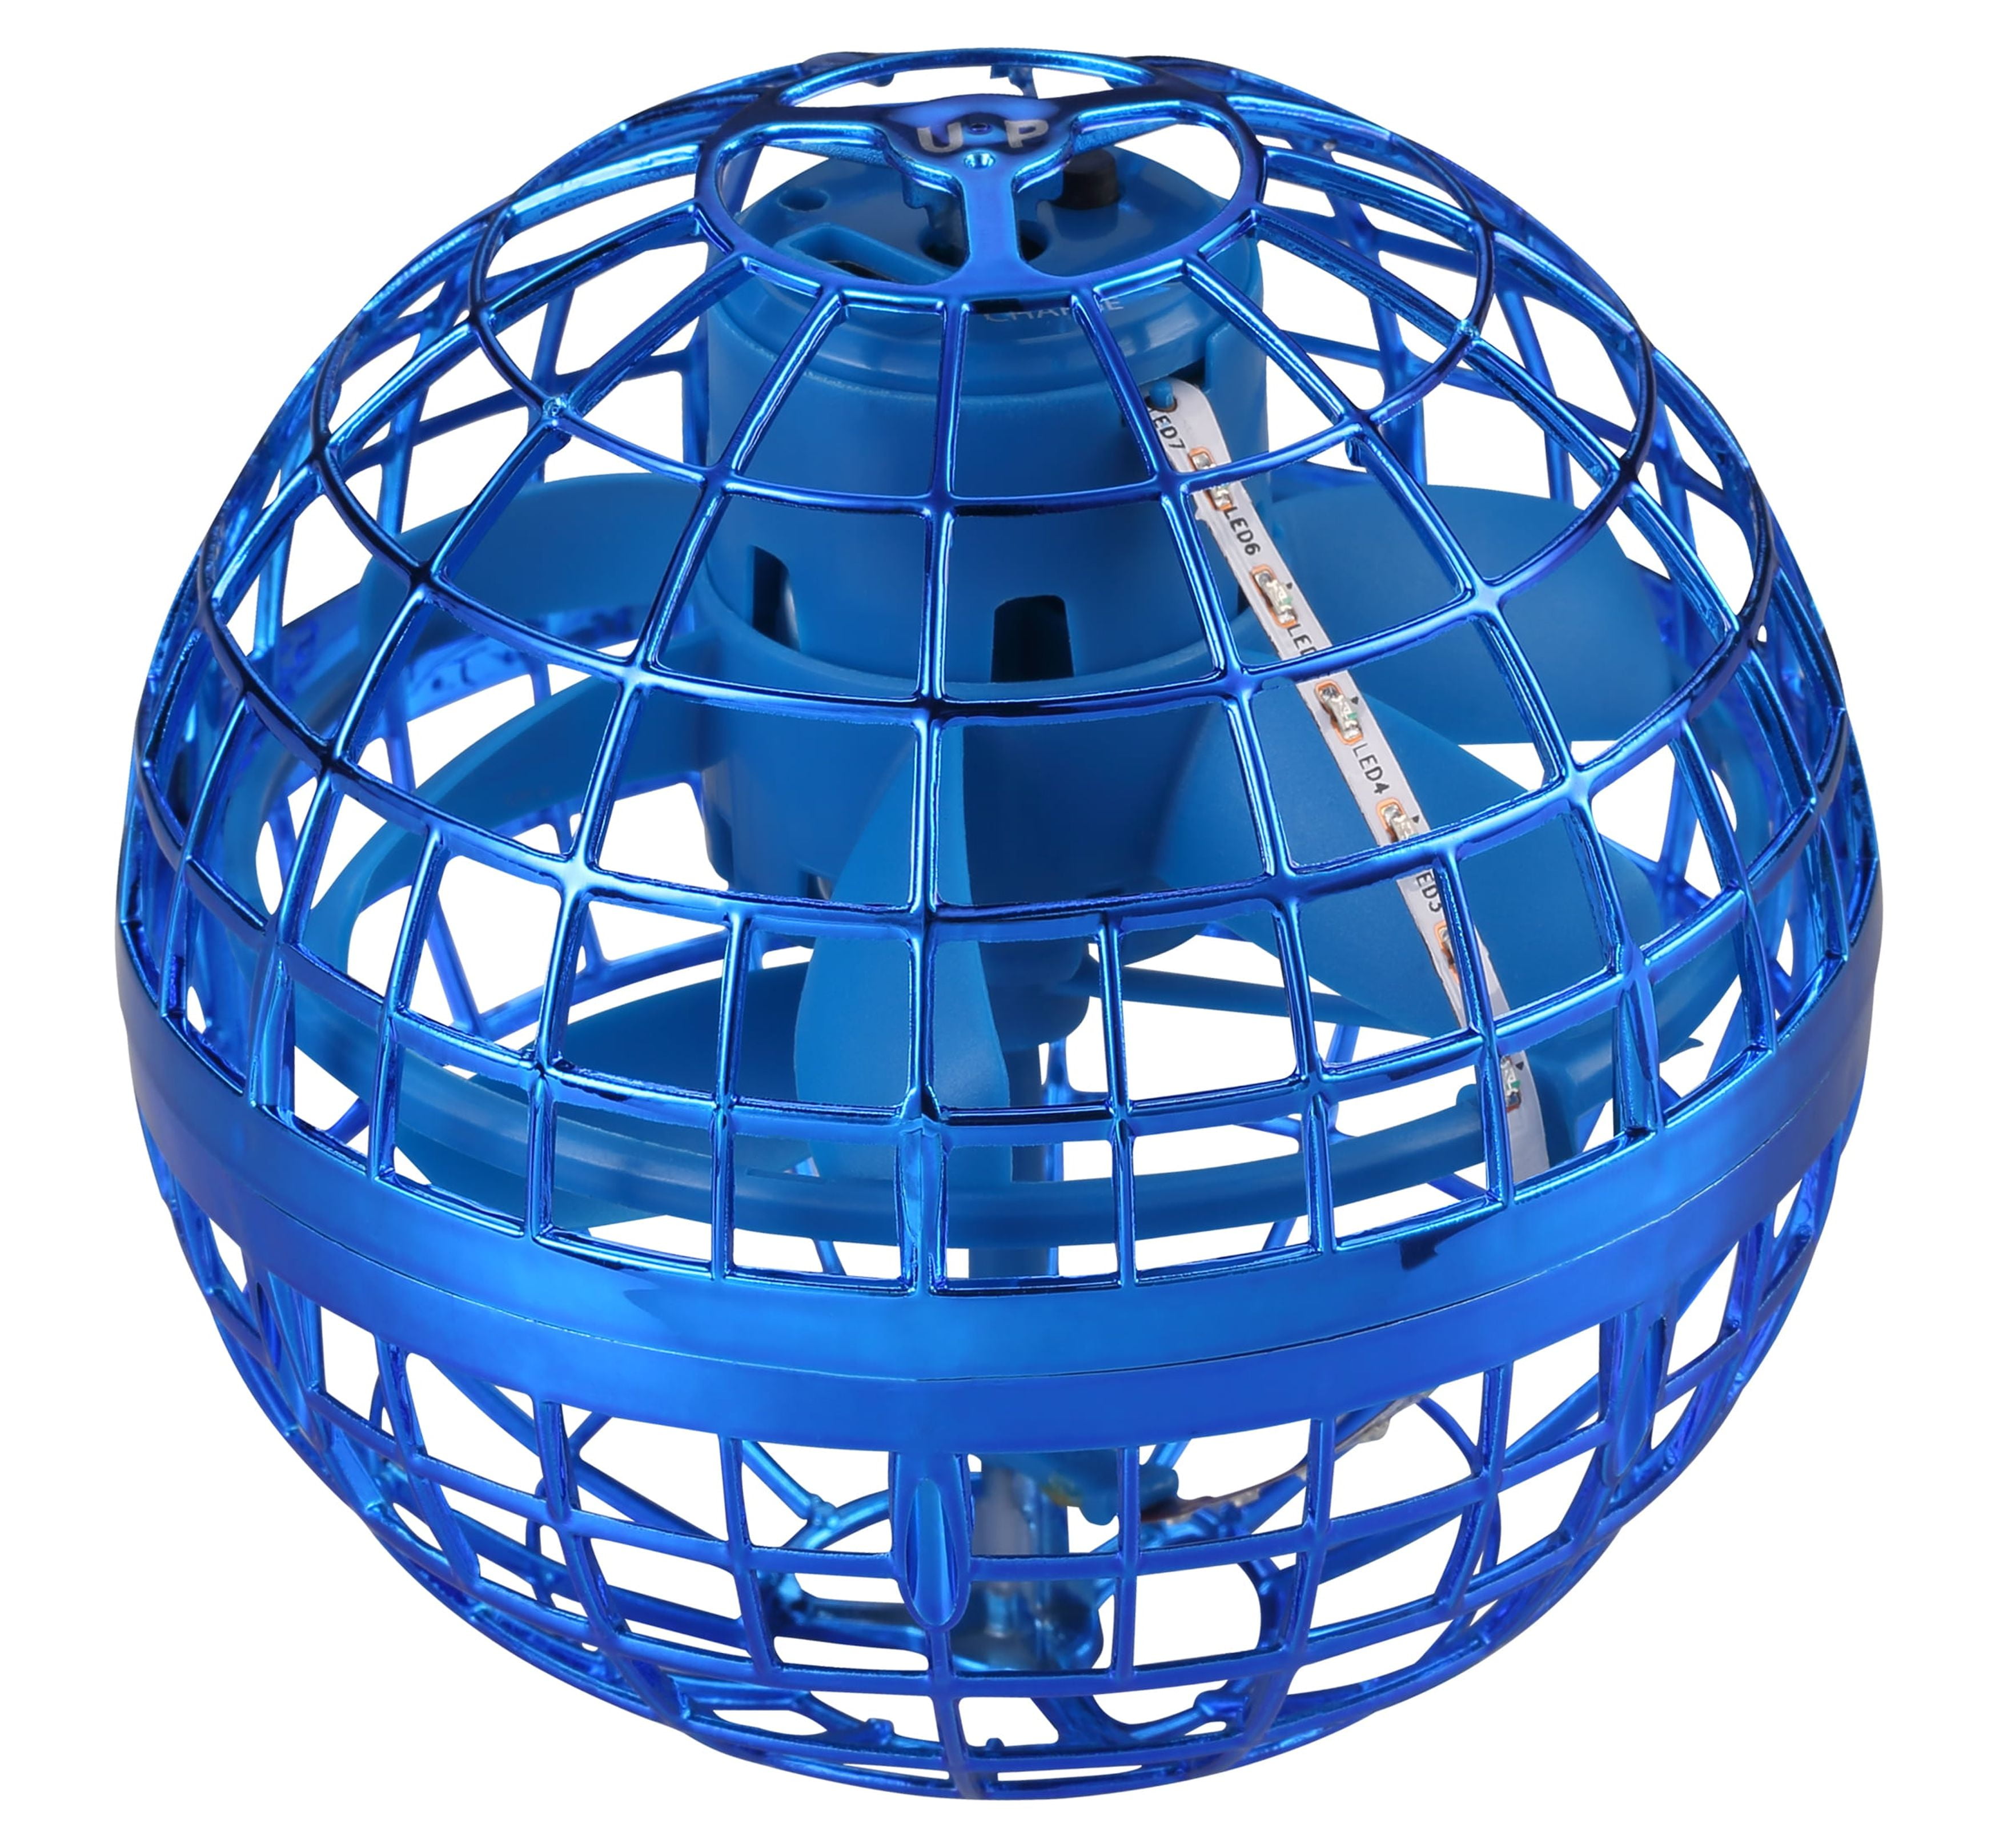 Wonder Sphere Magic Hover Ball- Purple Color- Skill Level Easy